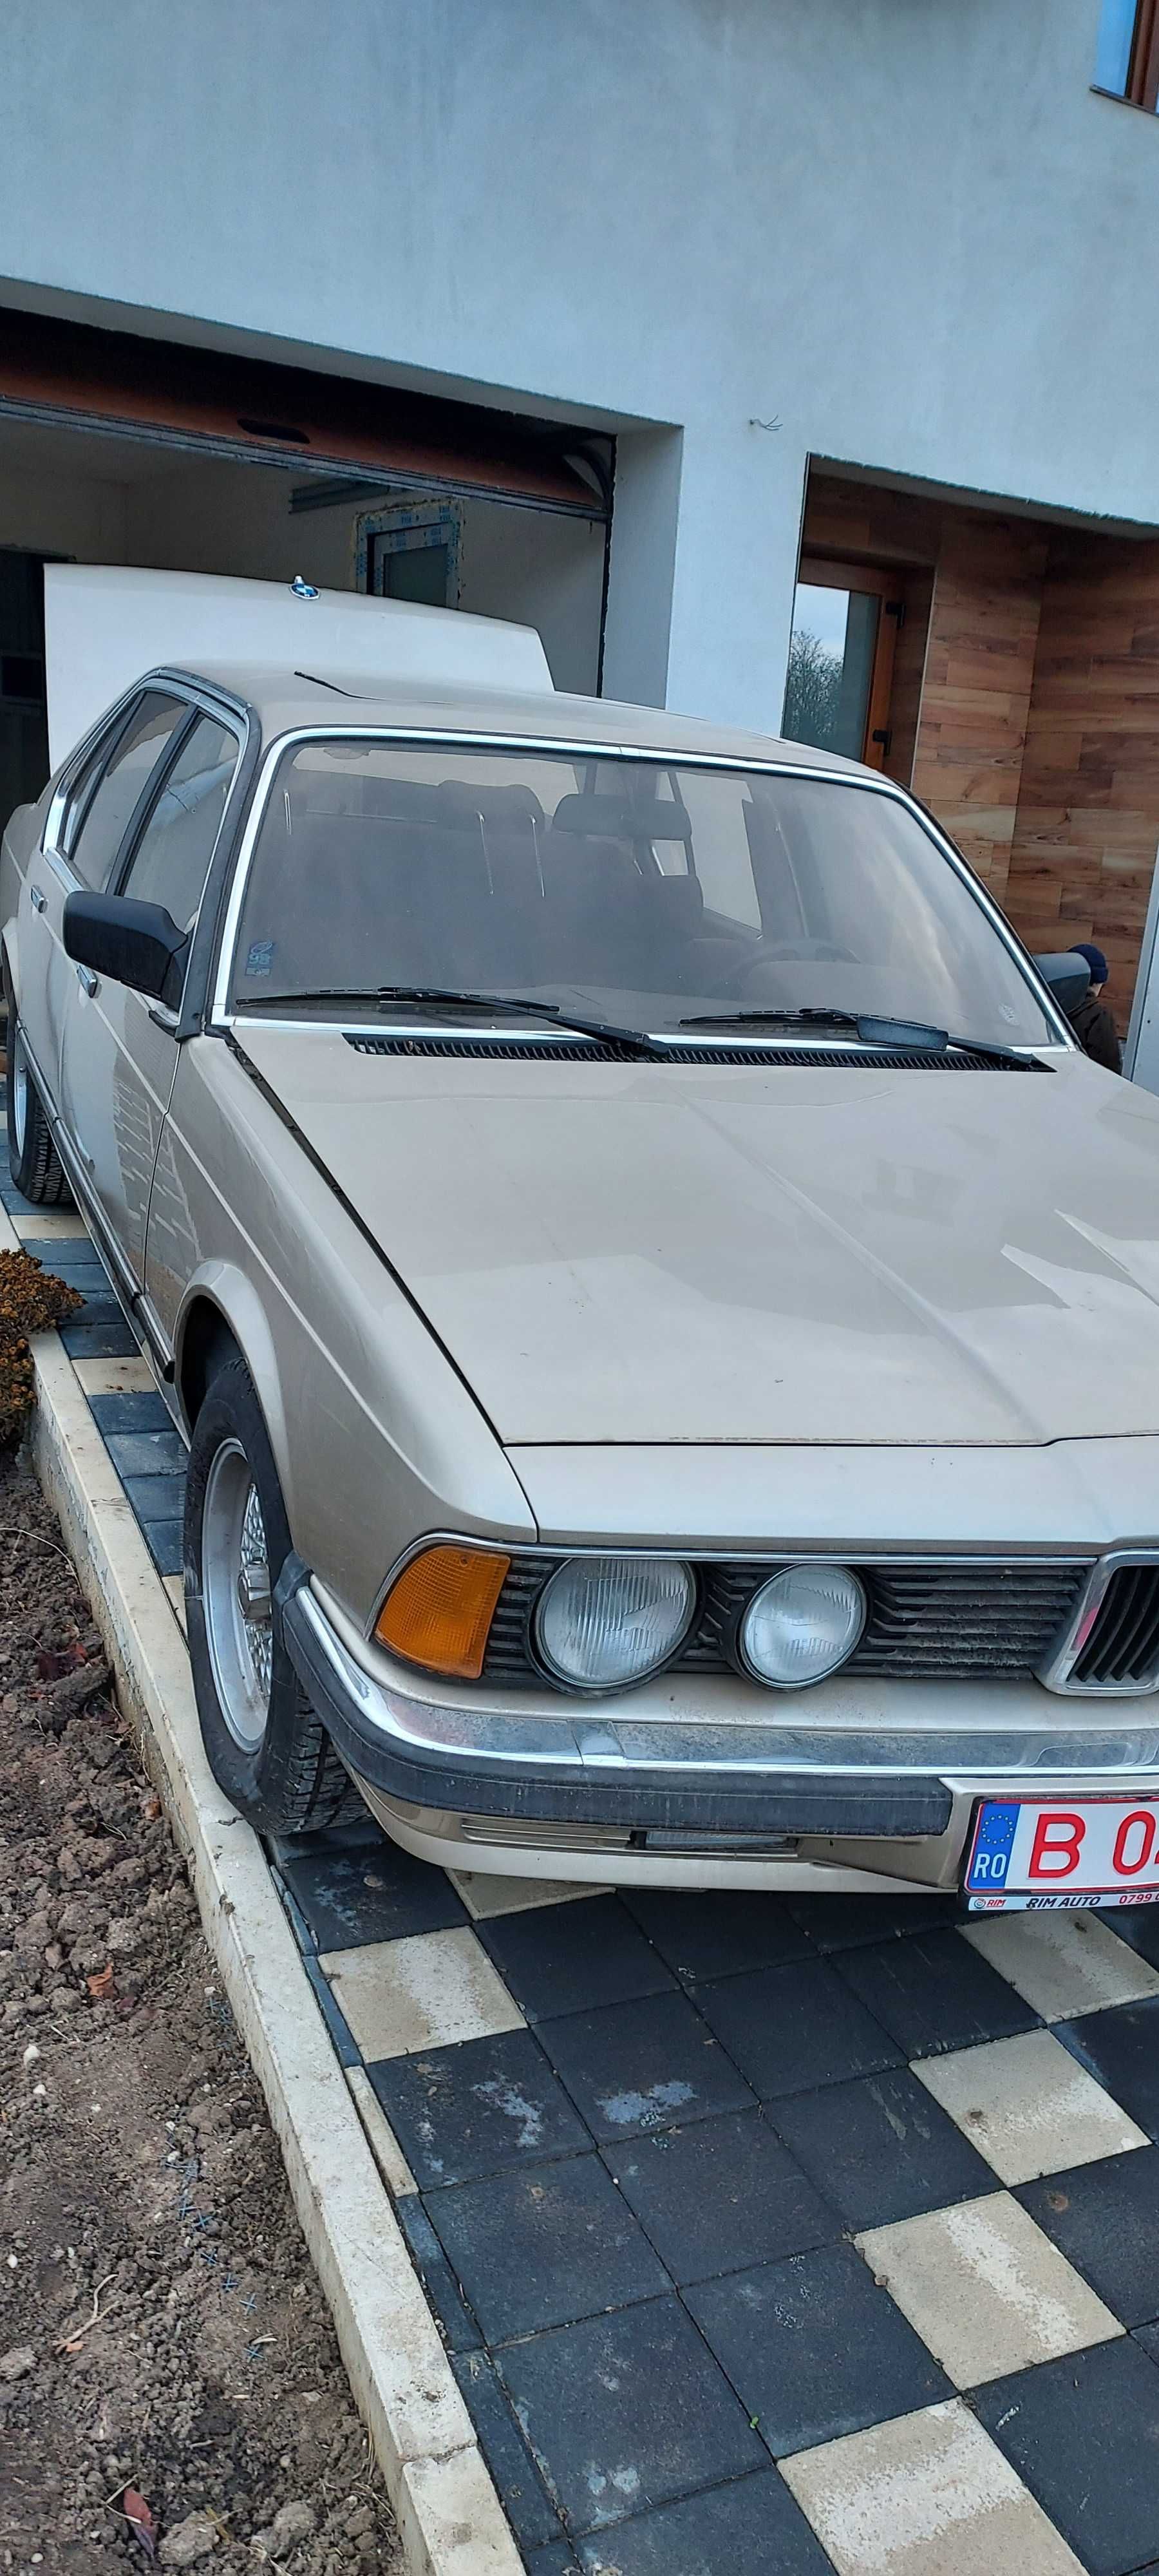 BMW E23/ RECHIN - masina epoca, Unicala!!!